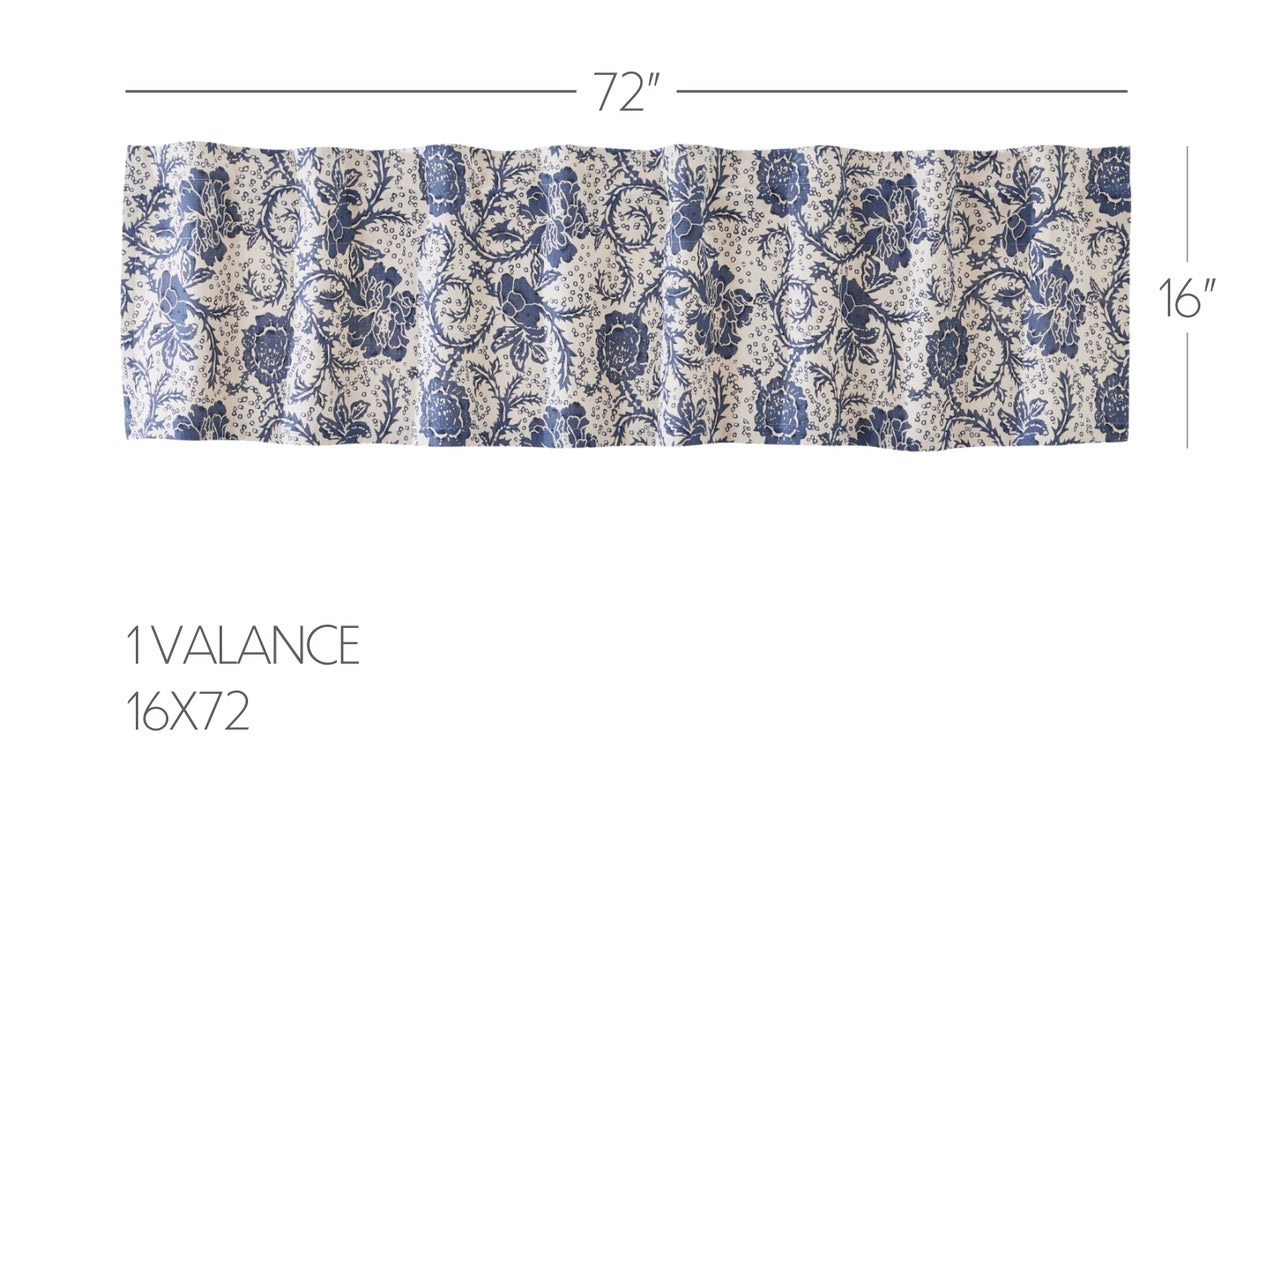 Dorset Navy Floral Valance Curtain 16x72 VHC Brands